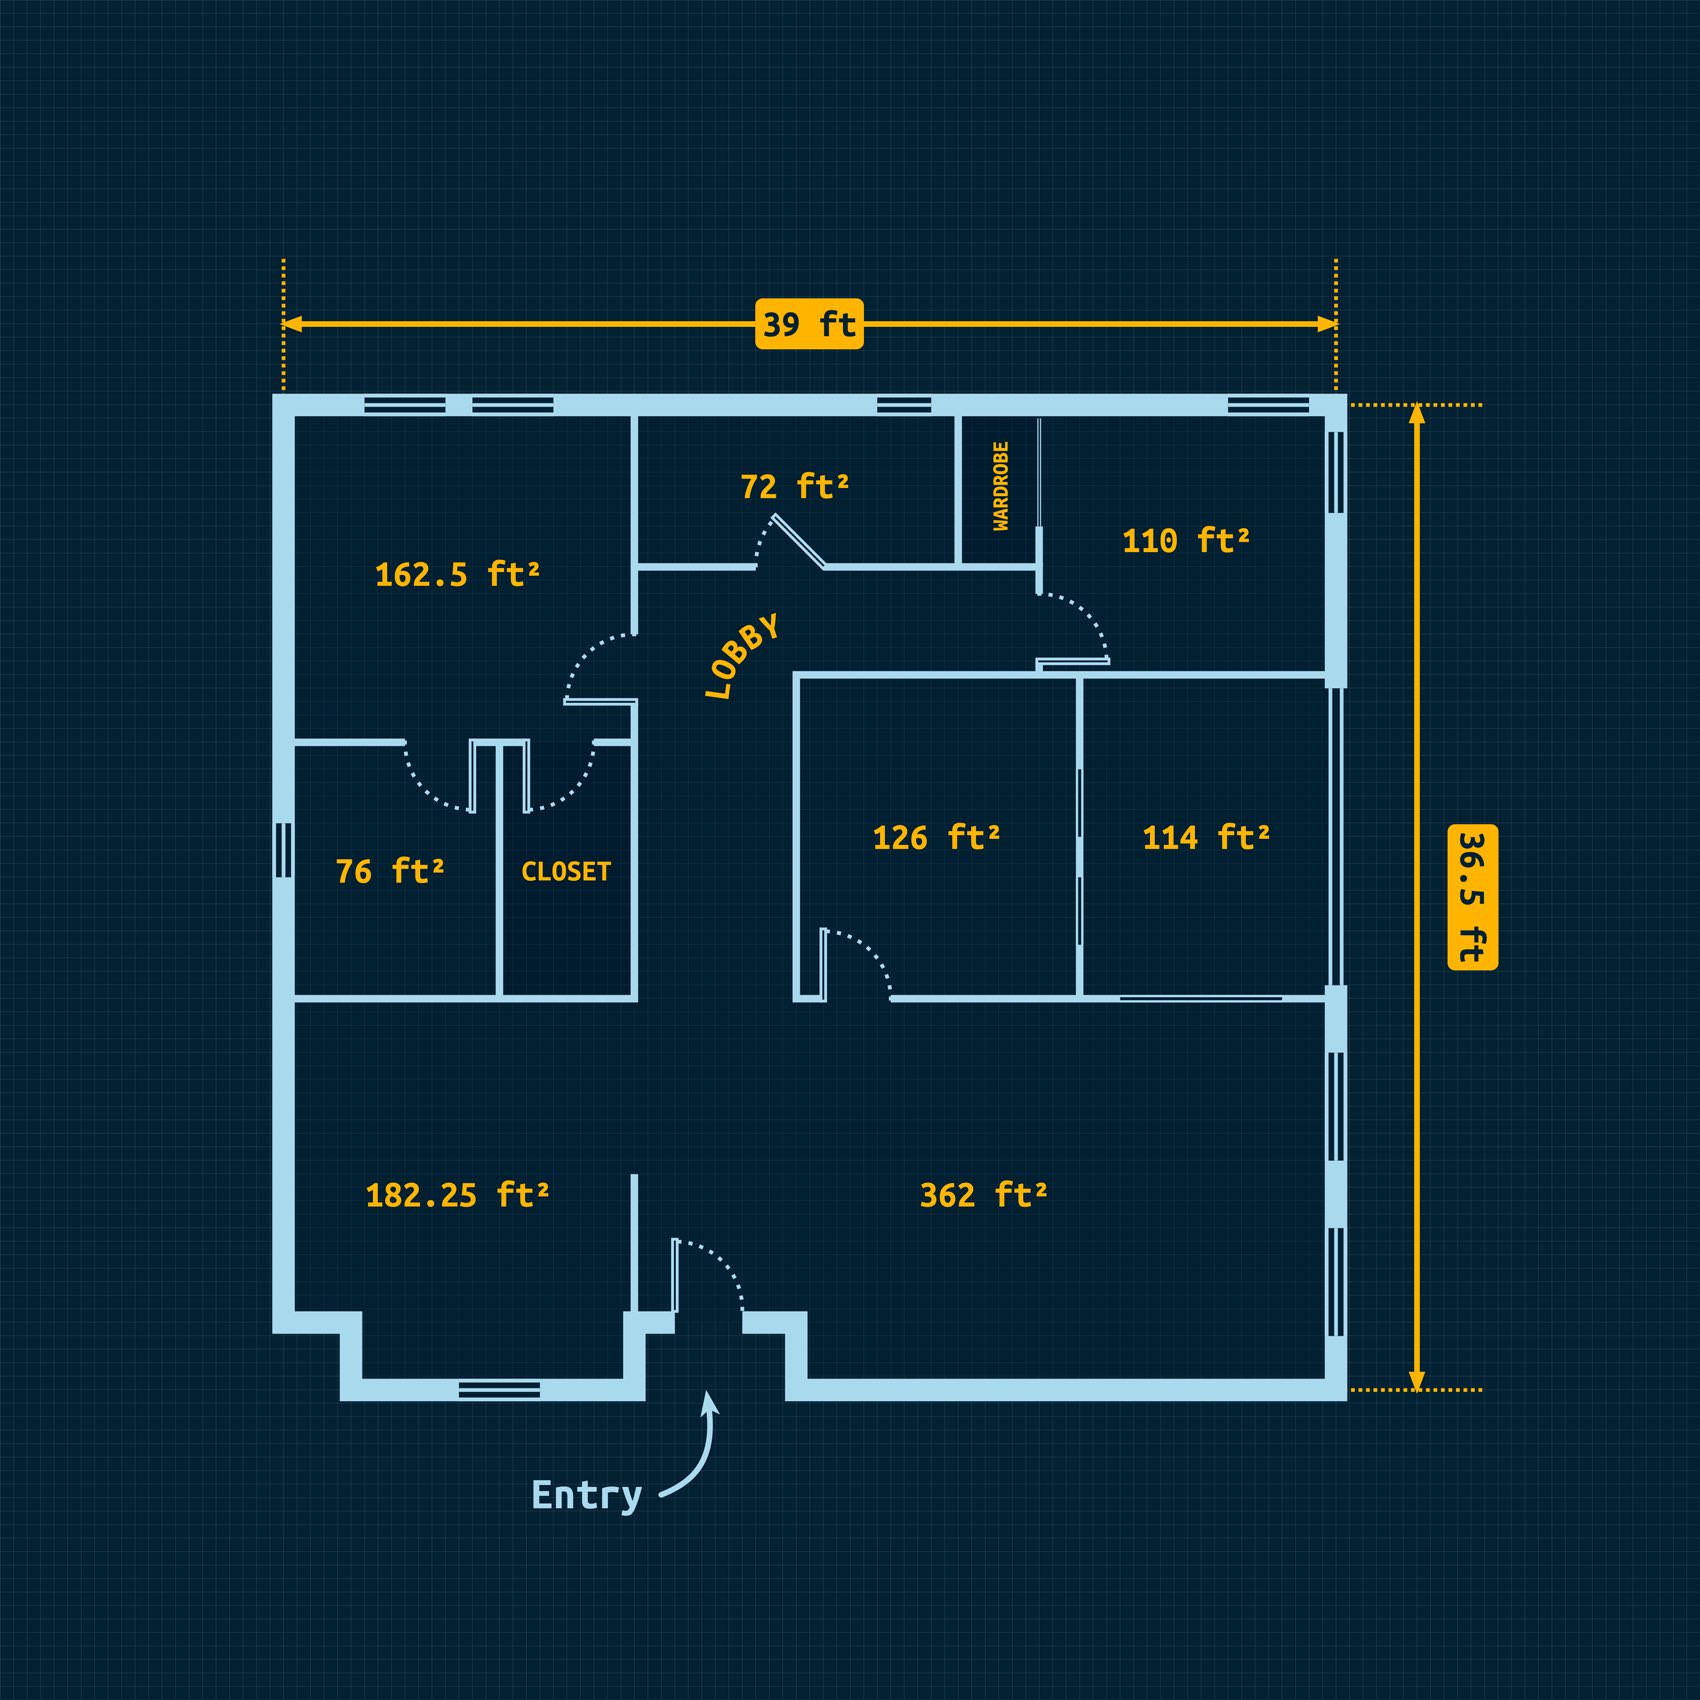 Simple Floor Plan With Dimensions Floor Roma